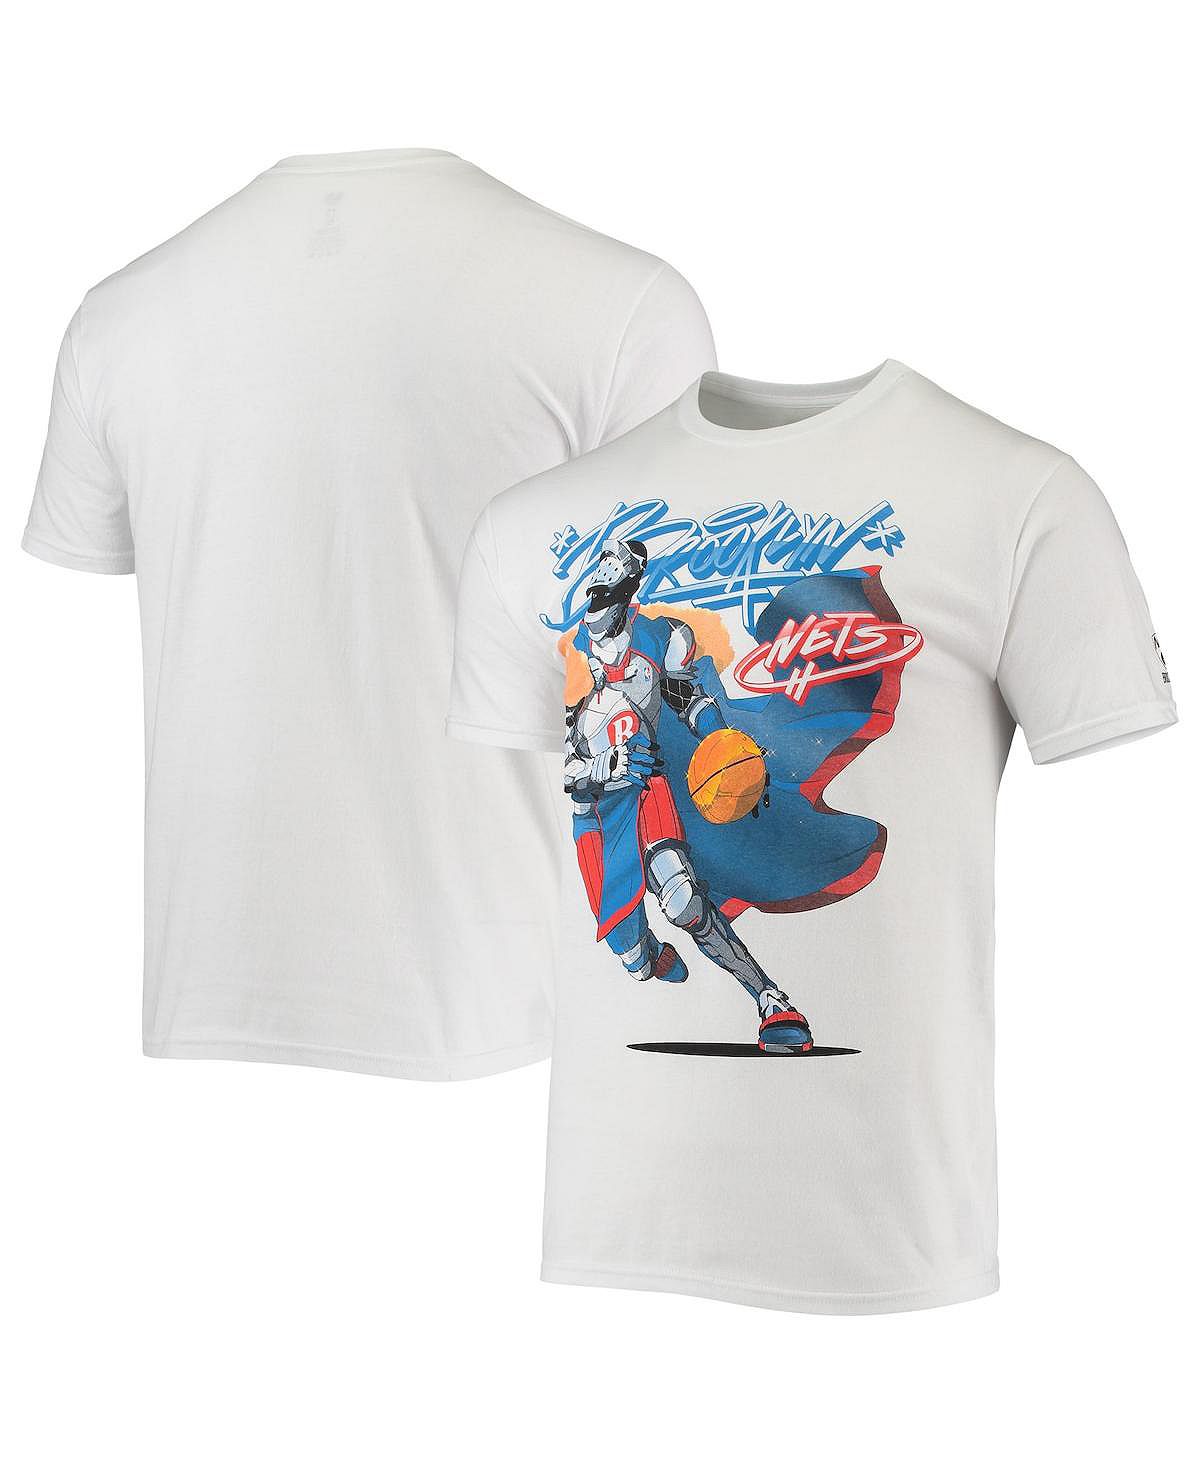 Мужская футболка nba x mcflyy white brooklyn nets identify artist series NBA Exclusive Collection, белый